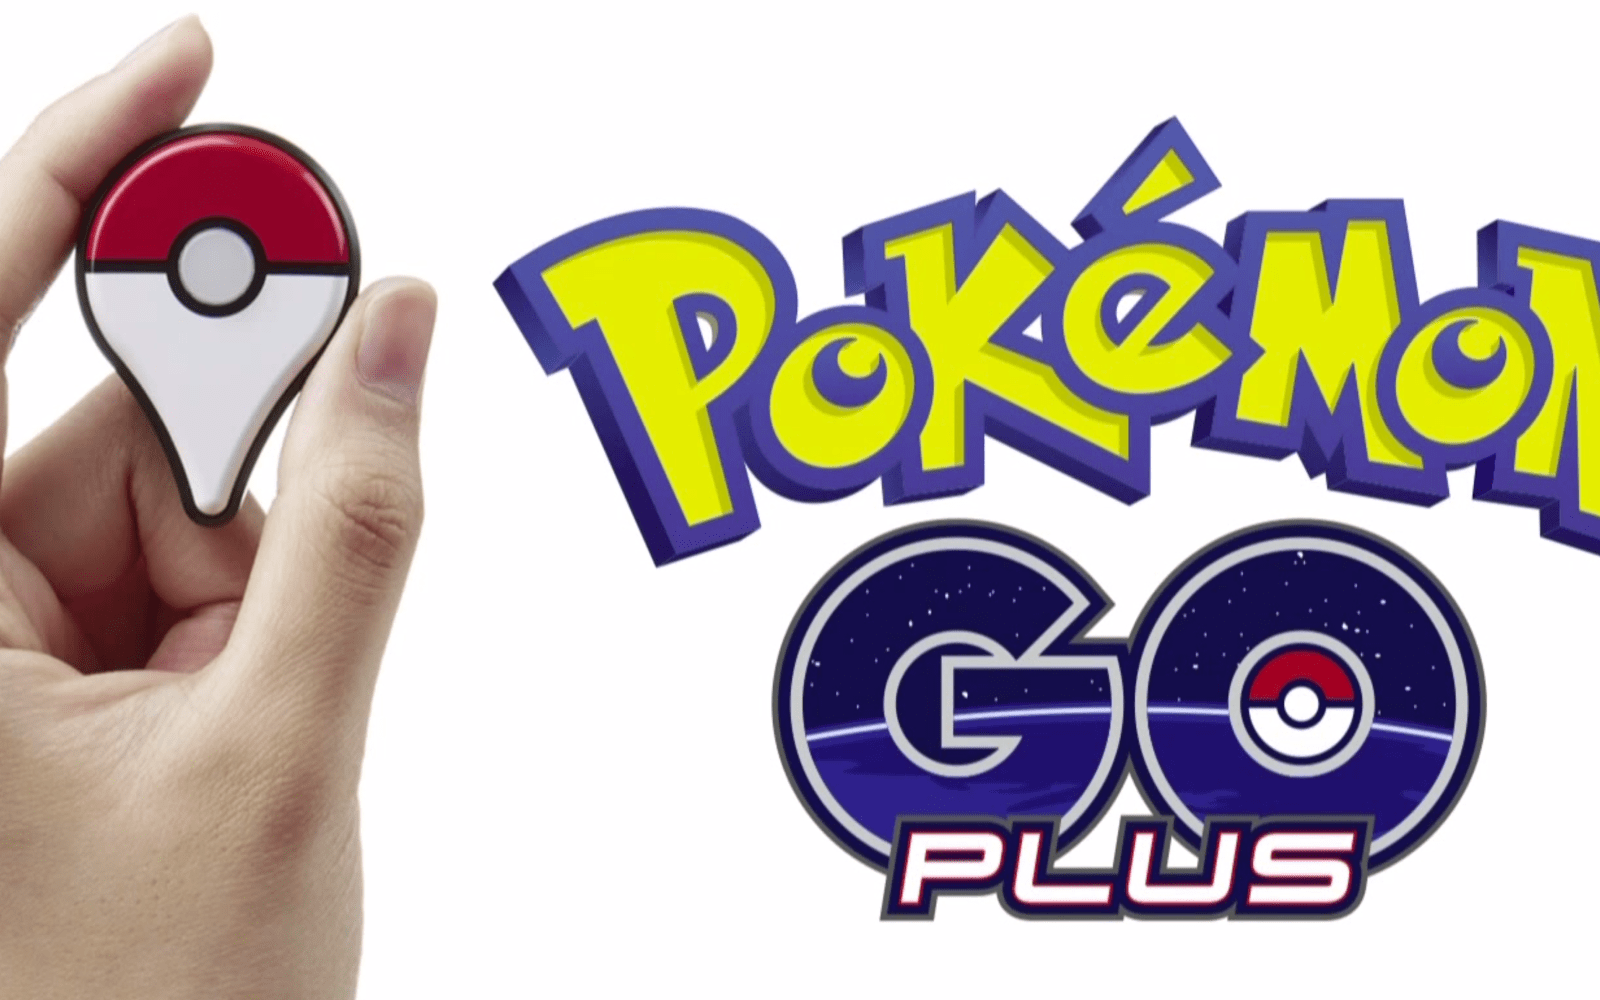 Pokémon Go Plus tracks distance in the background, counts ...